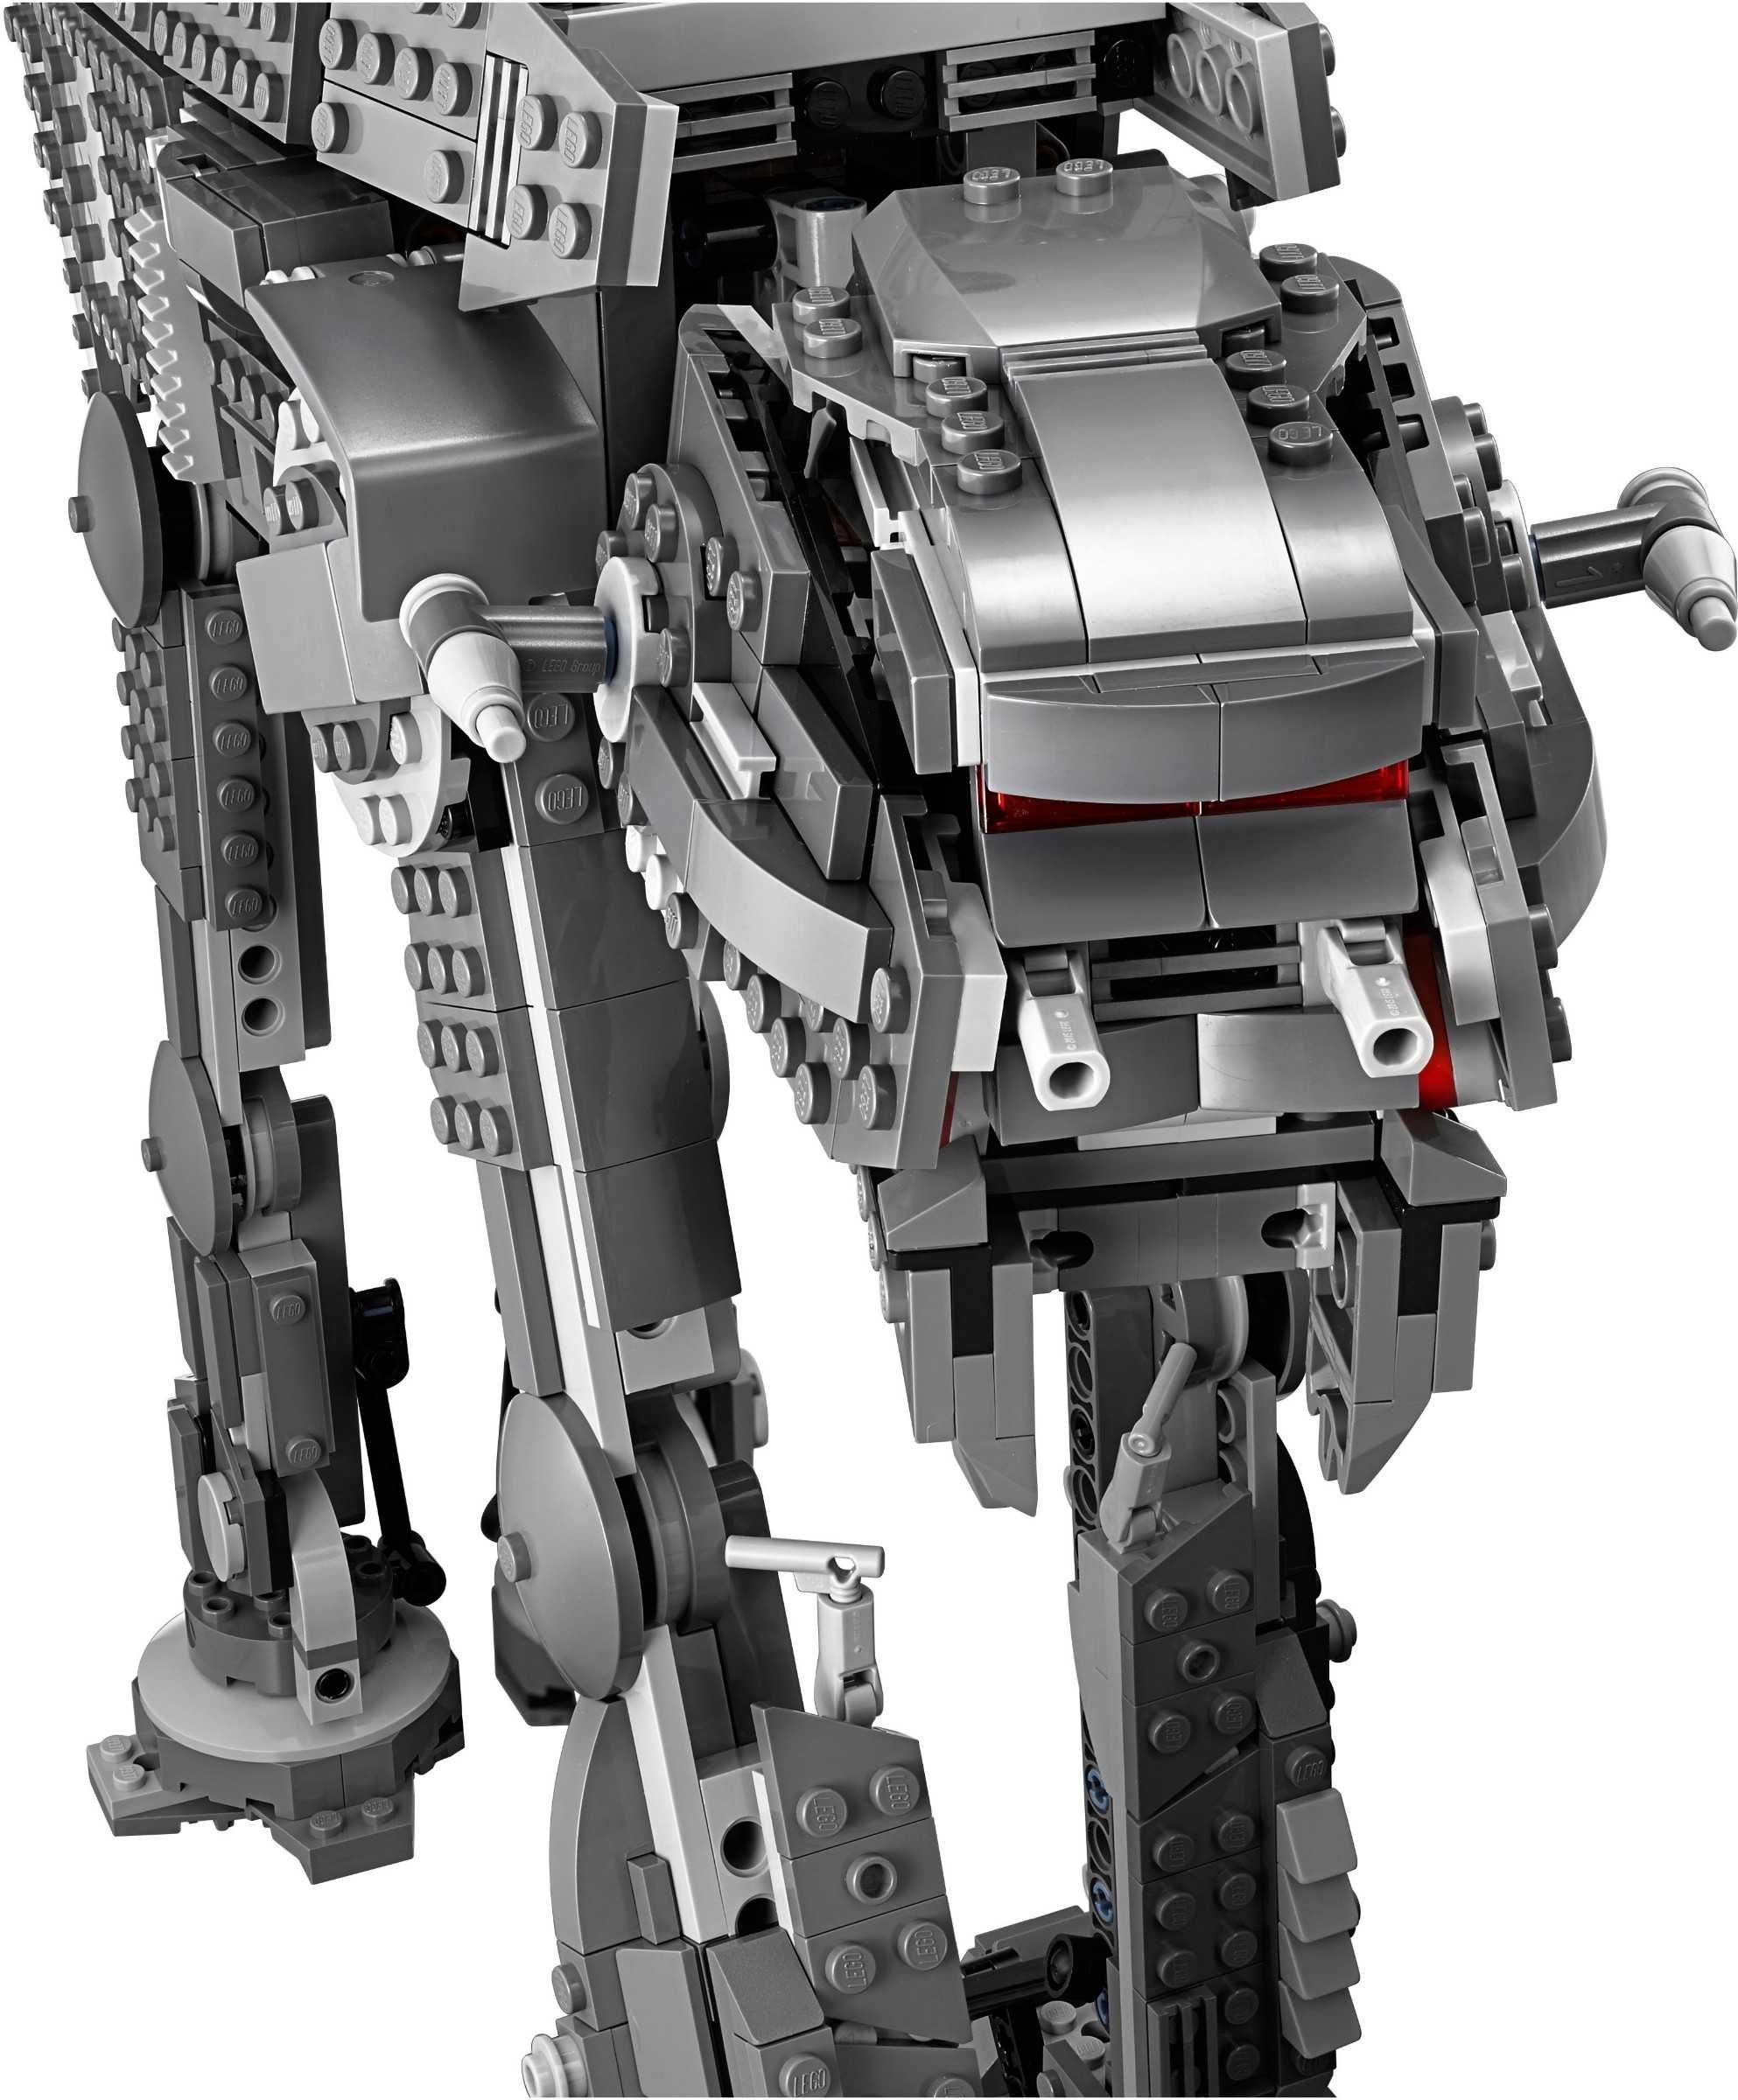 LEGO Star Wars 75189 - First Order Heavy Assault Walker- AT-AT